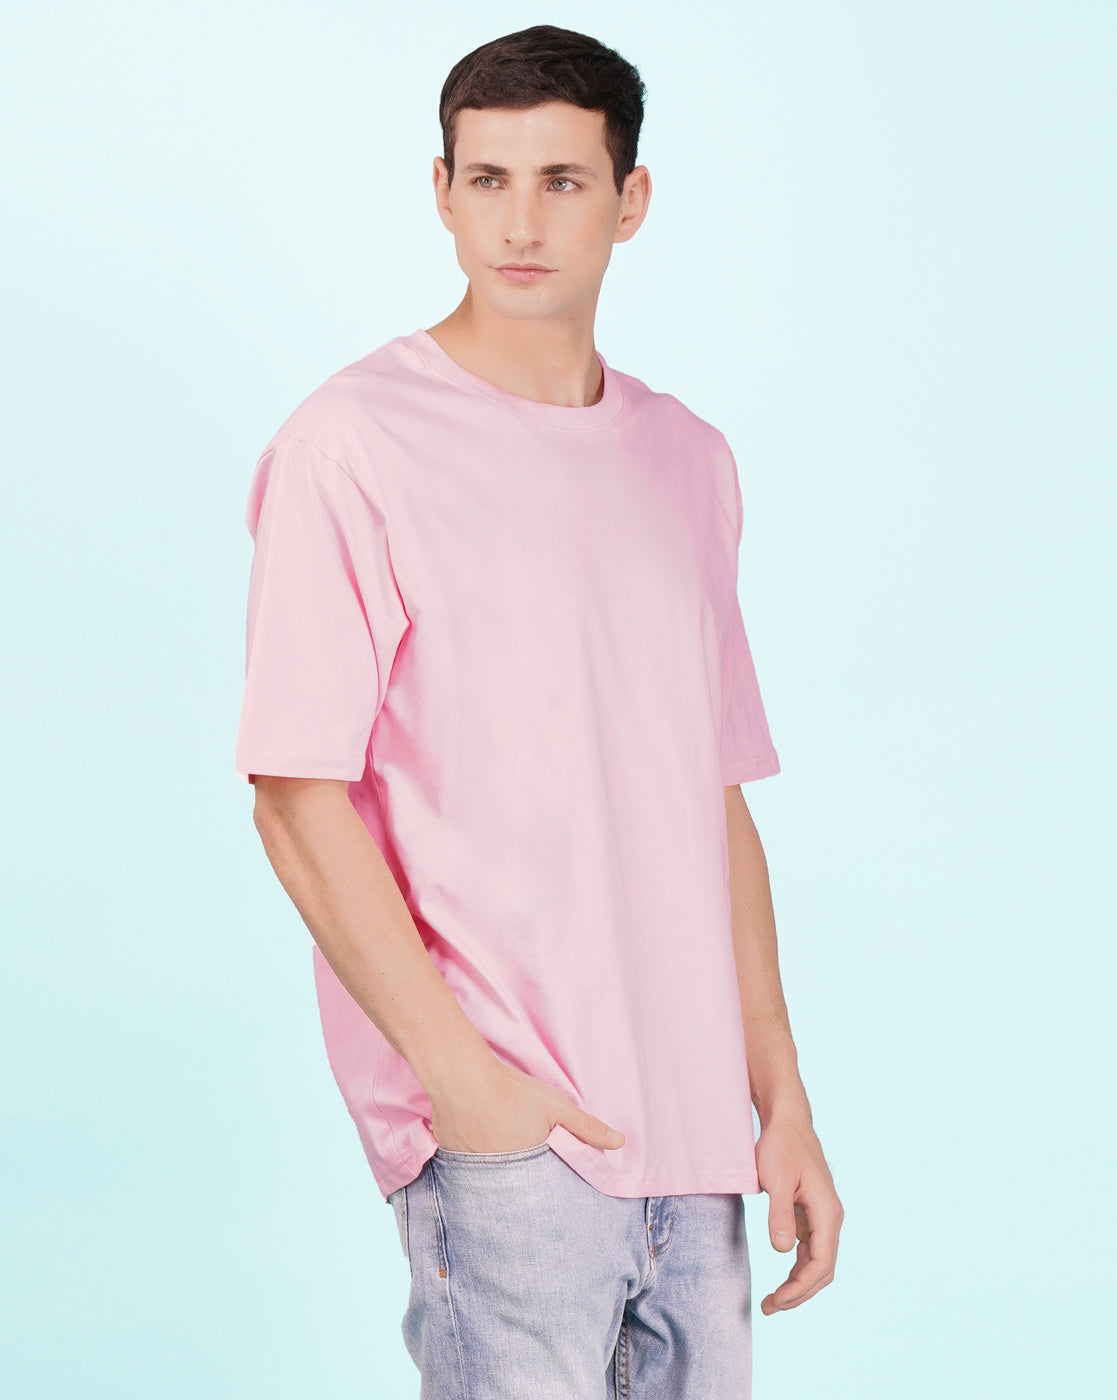 Nusyl Men Solid Light Pink oversized t-shirt